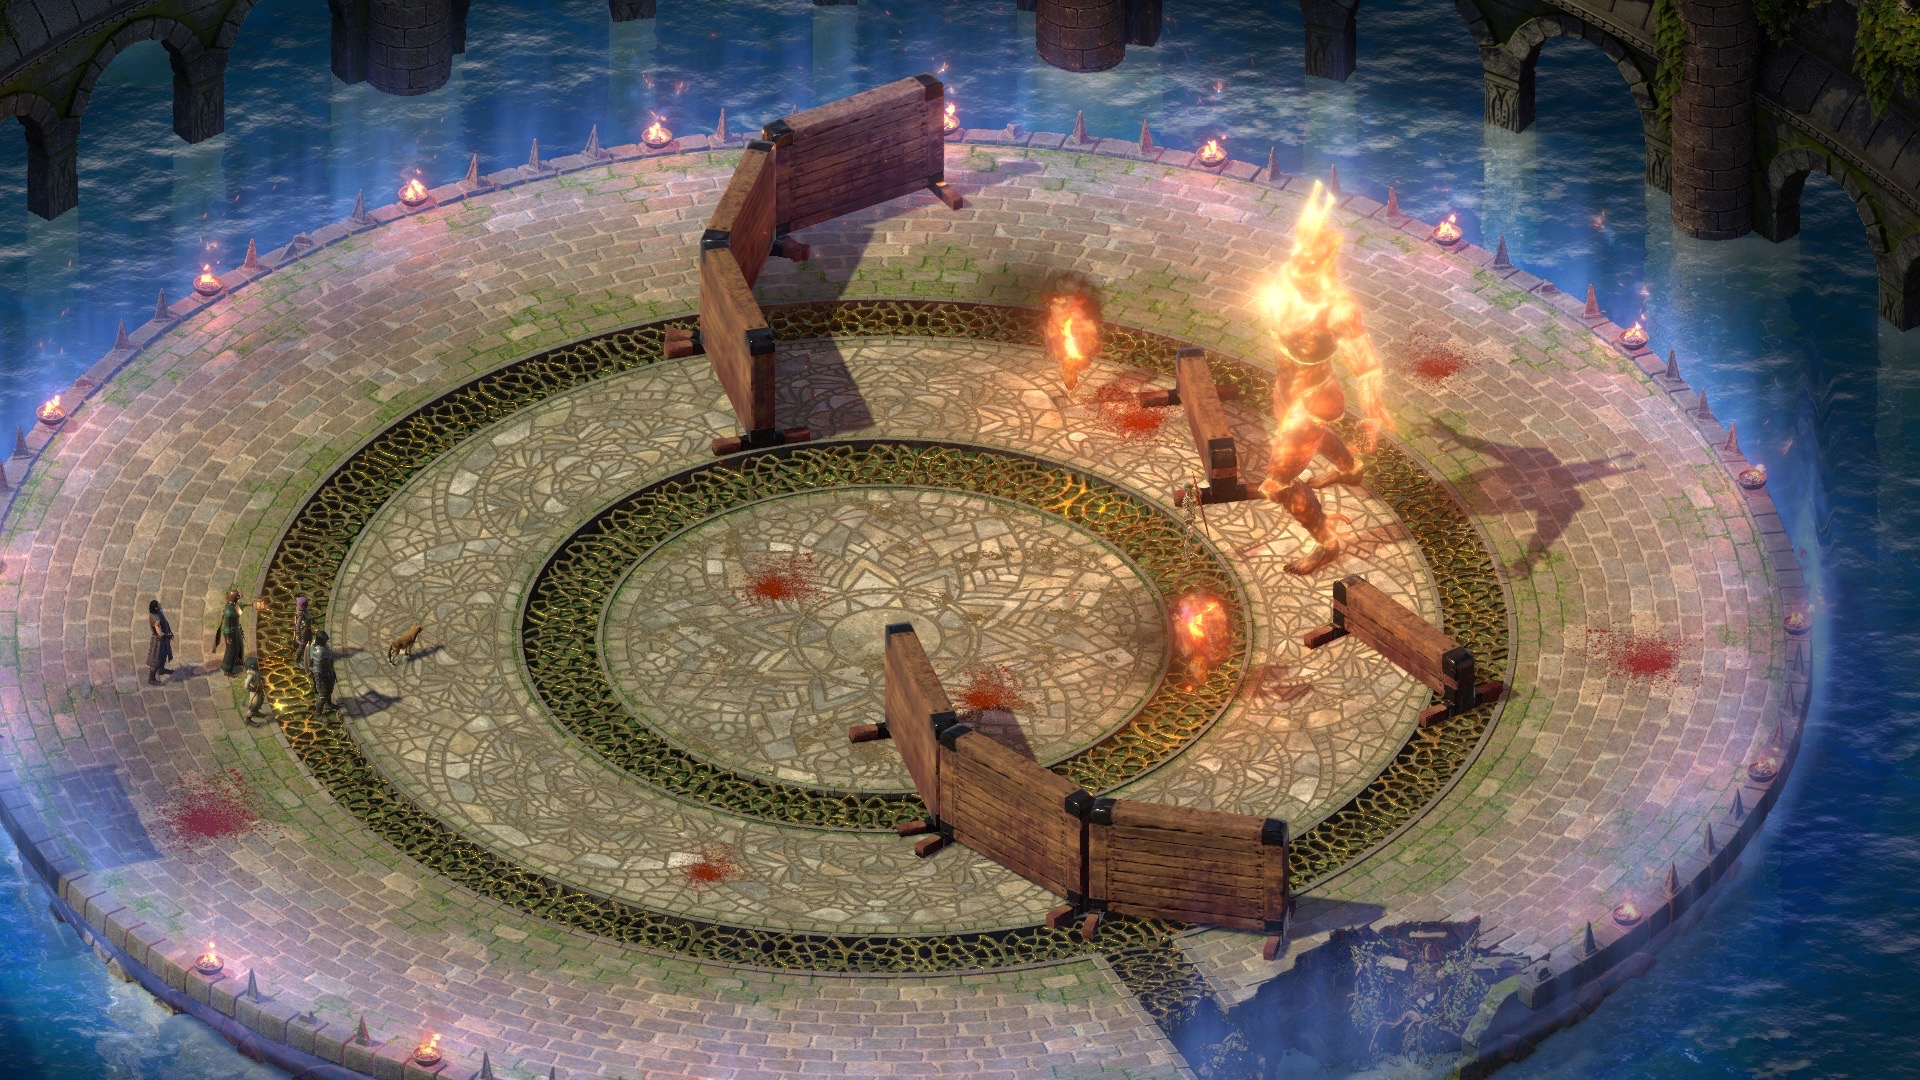 Pillars of Eternity II: Deadfire - Seeker, Slayer, Survivor Featured Screenshot #1